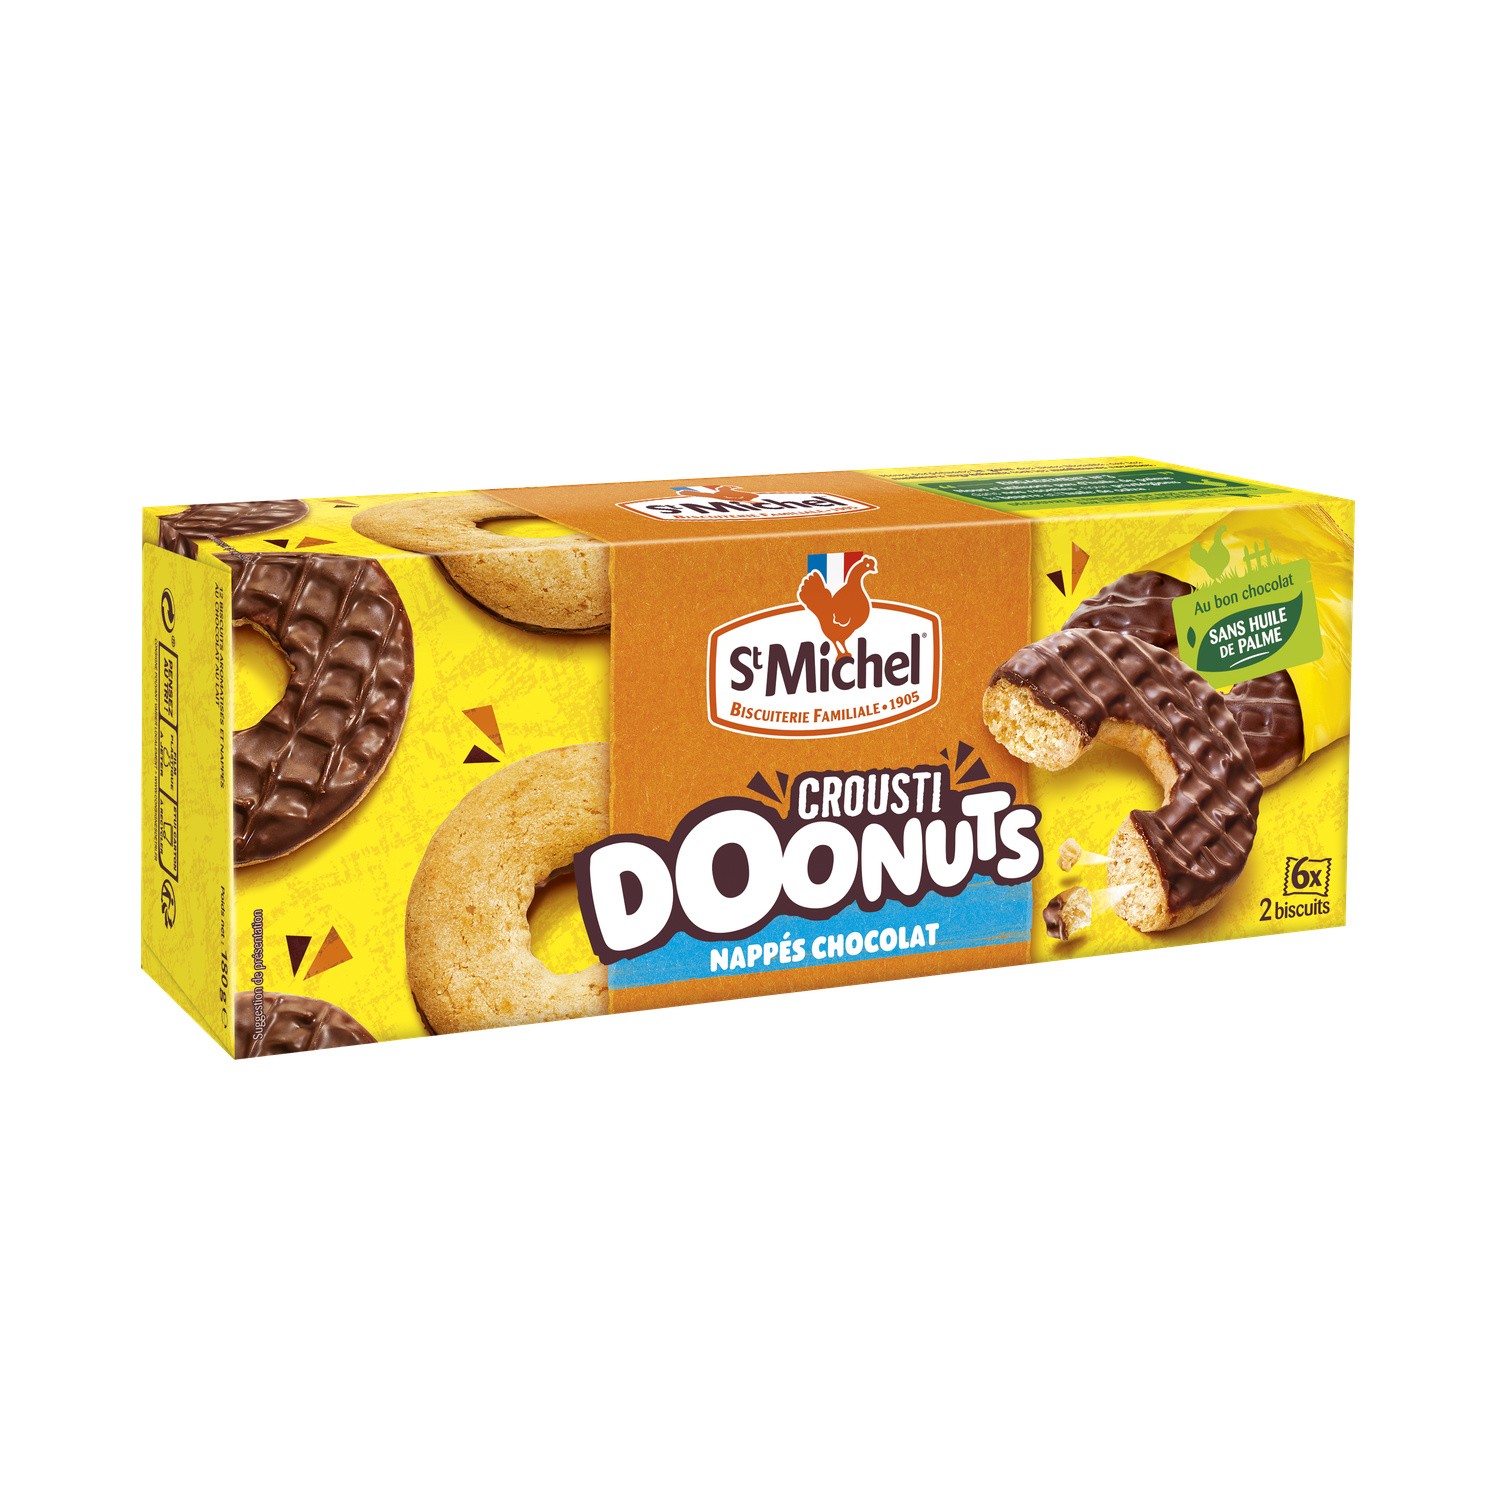 Biscuits Crousti Doonuts nappés chocolat